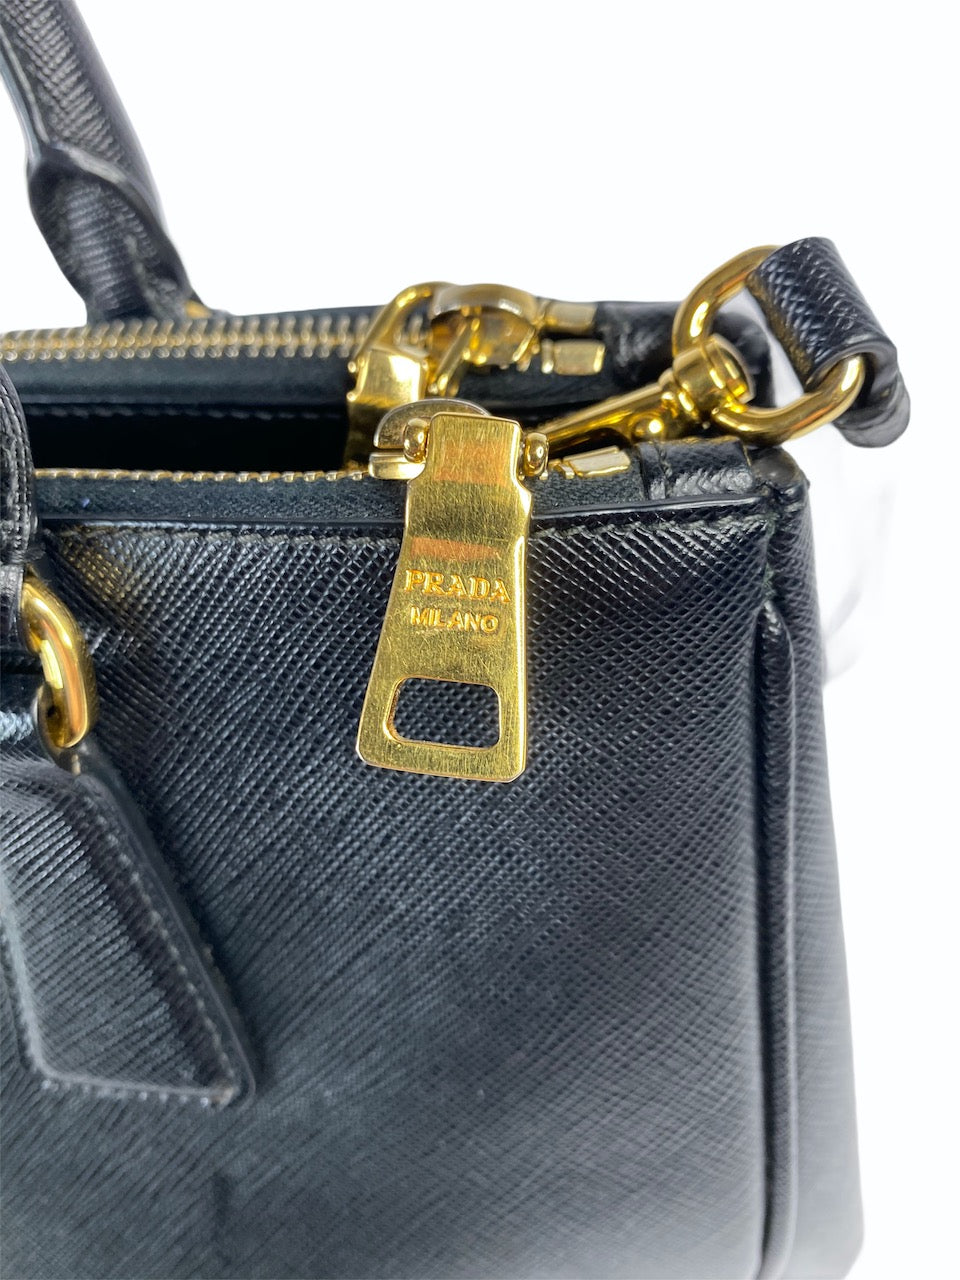 Prada Black Saffiano Leather Double Zip Tote - Siopaella Designer Exchange